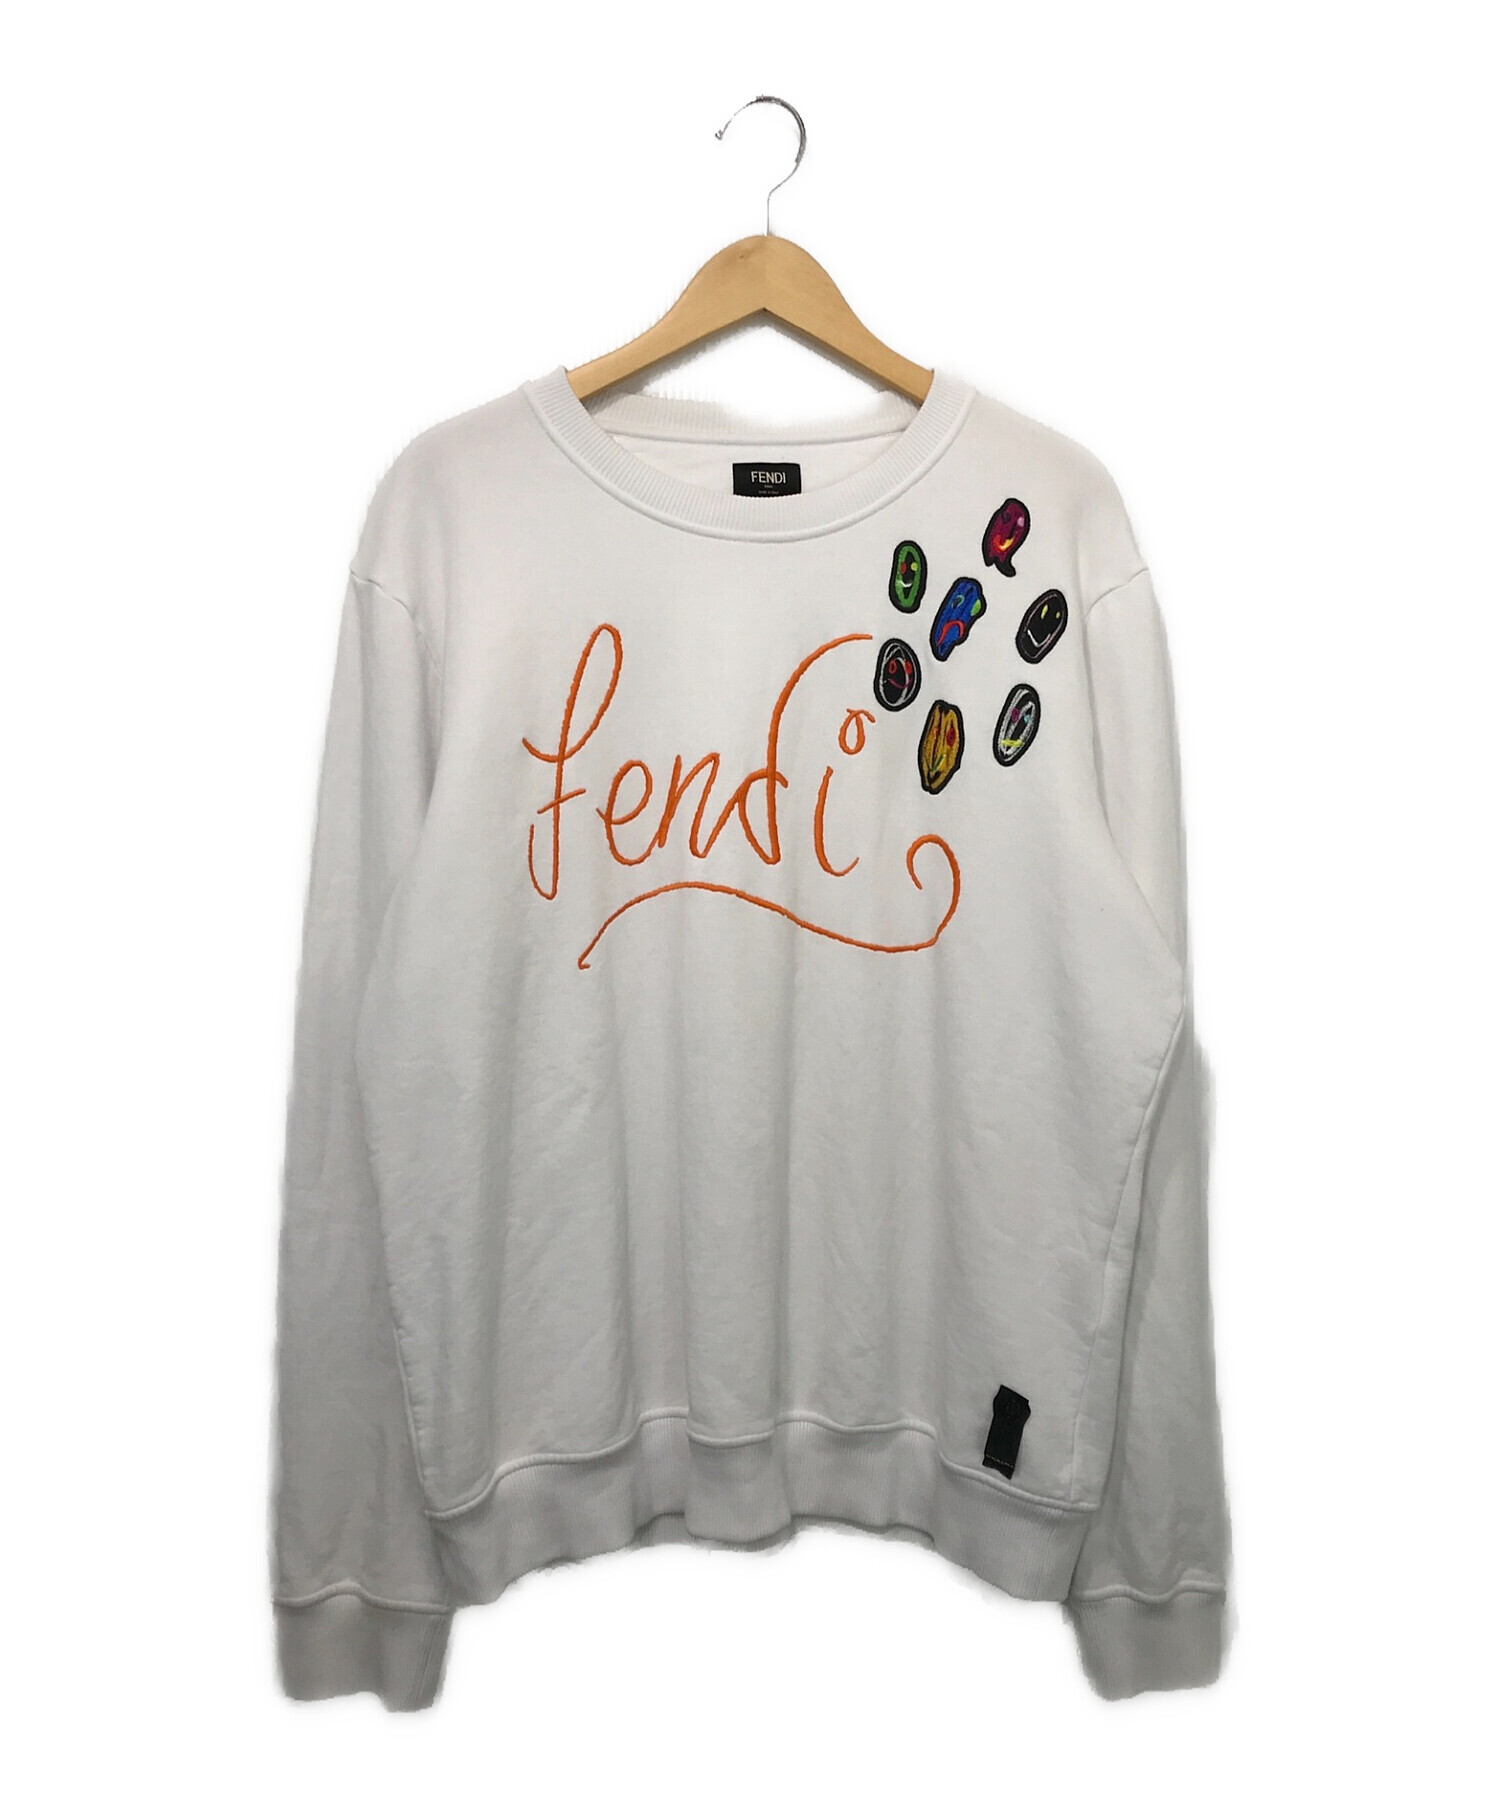 FENDI (フェンディ) ロゴ刺繍 クルーネック裏起毛スウェットトレーナー ホワイト サイズ:XL